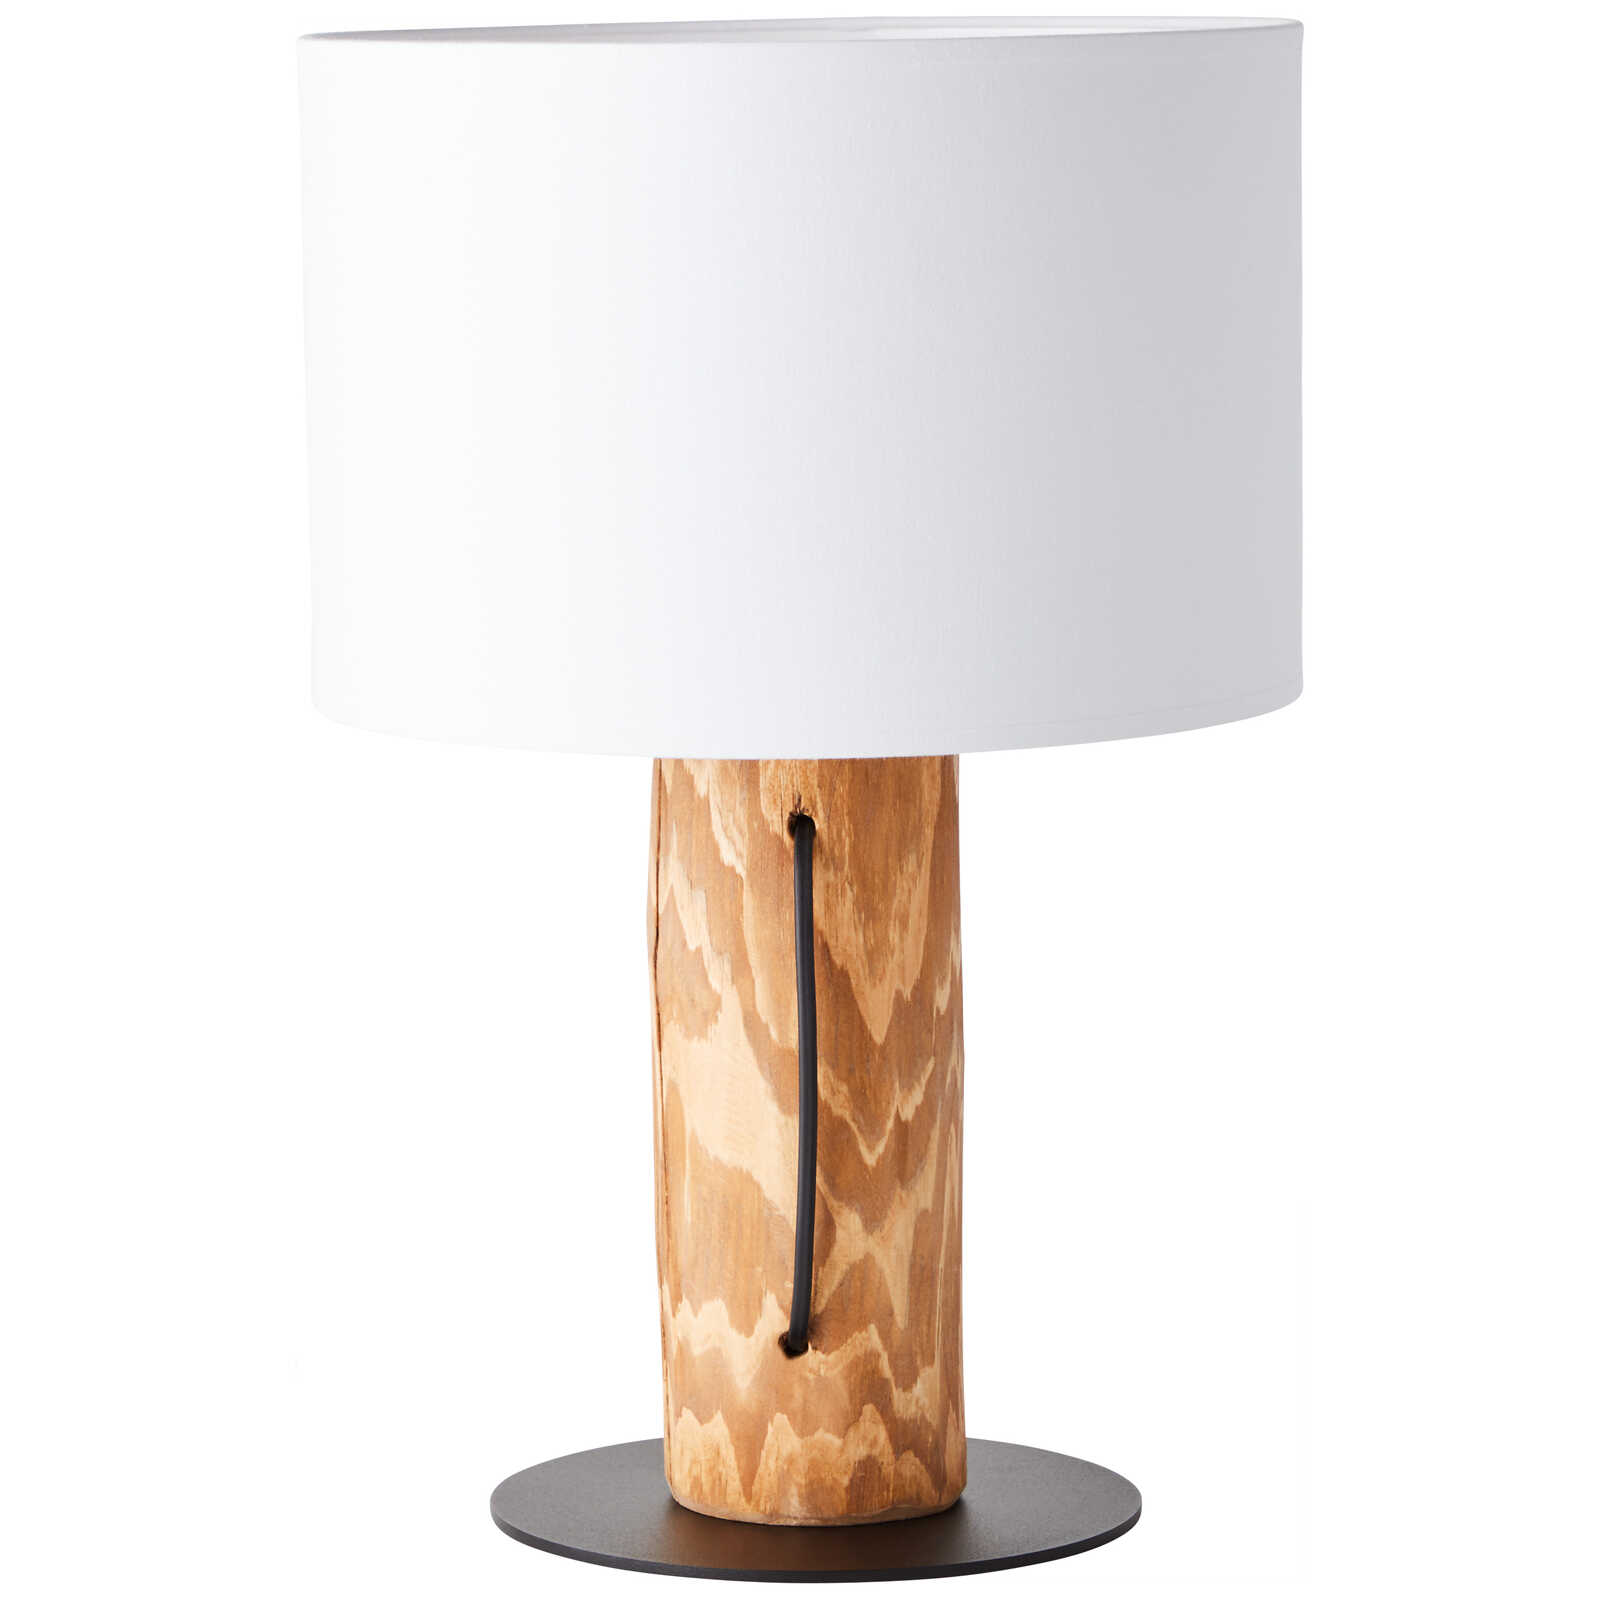             Textile table lamp - Joshua 1 - Brown
        